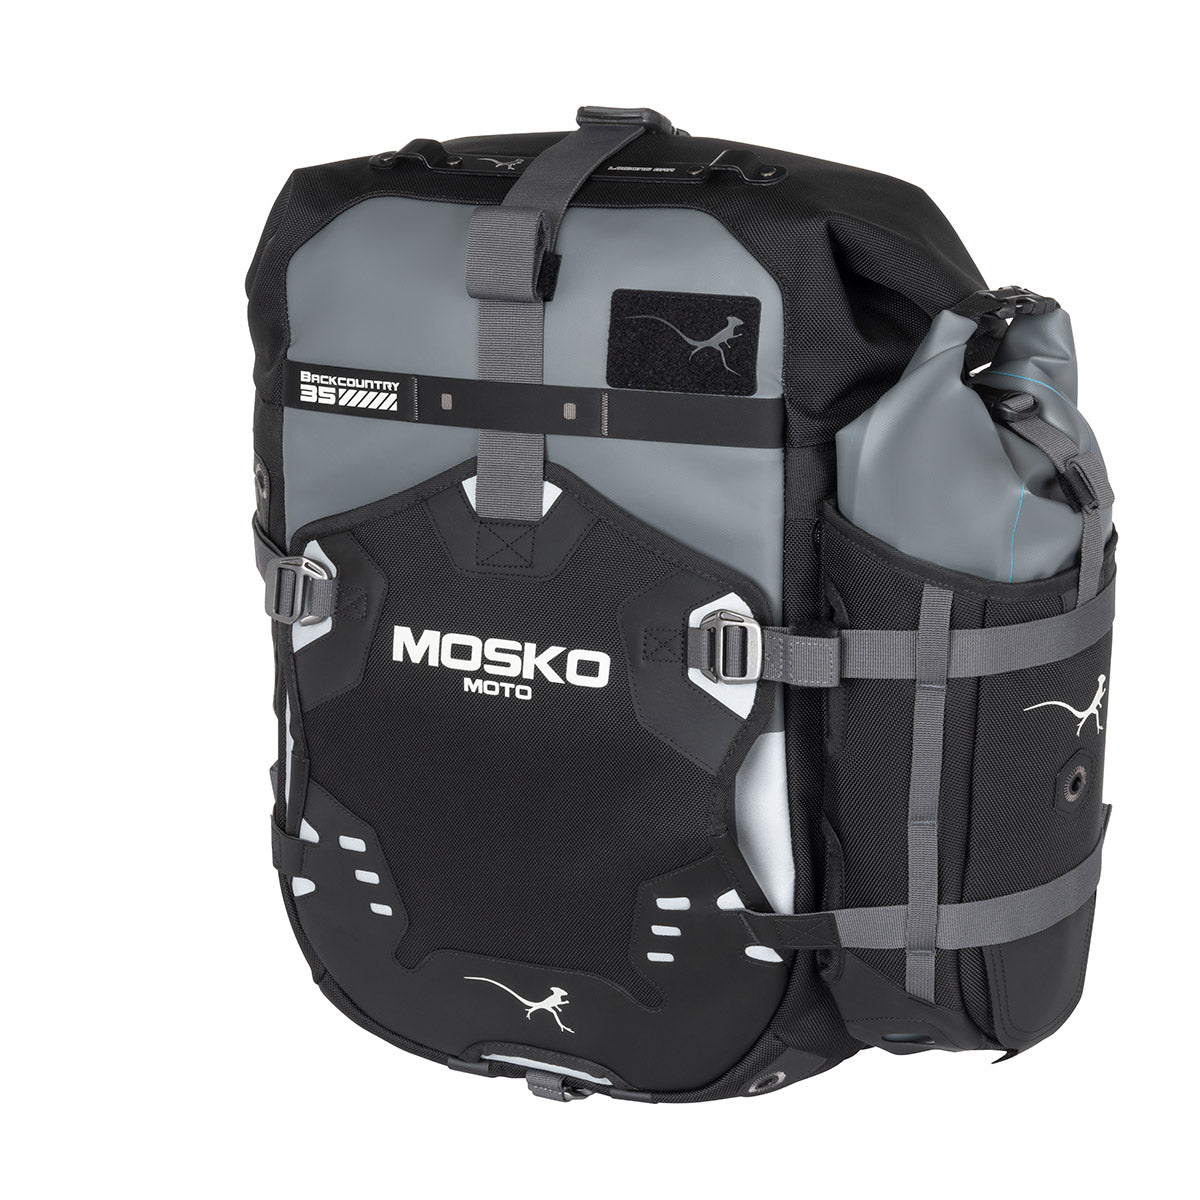 Motorcycle Luggage | Mosko Moto